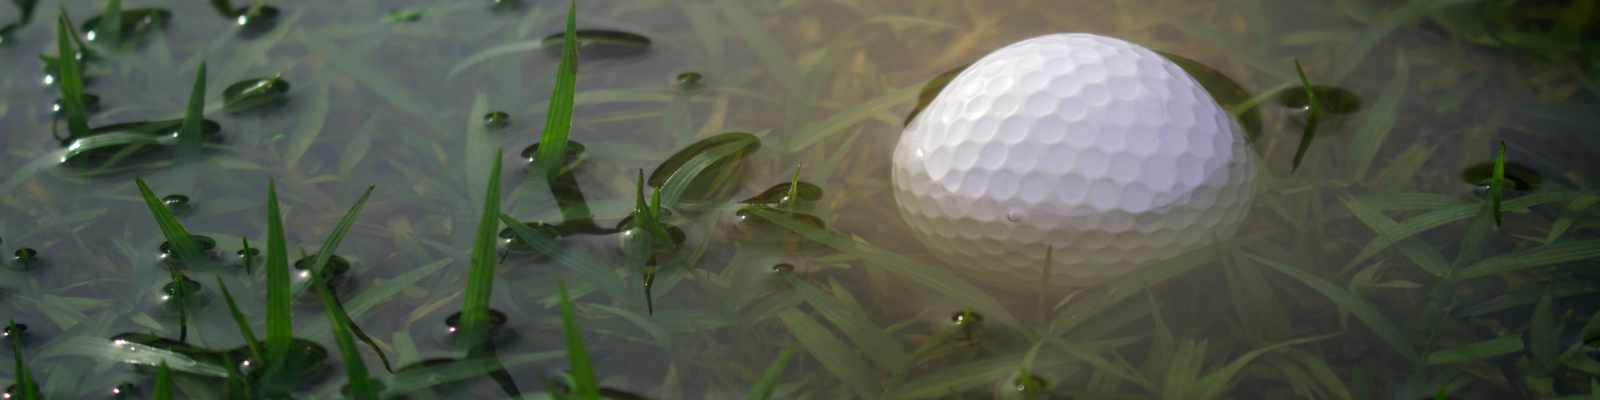 Golfball im Wasser (photo by Krumao / Shutterstock.com)